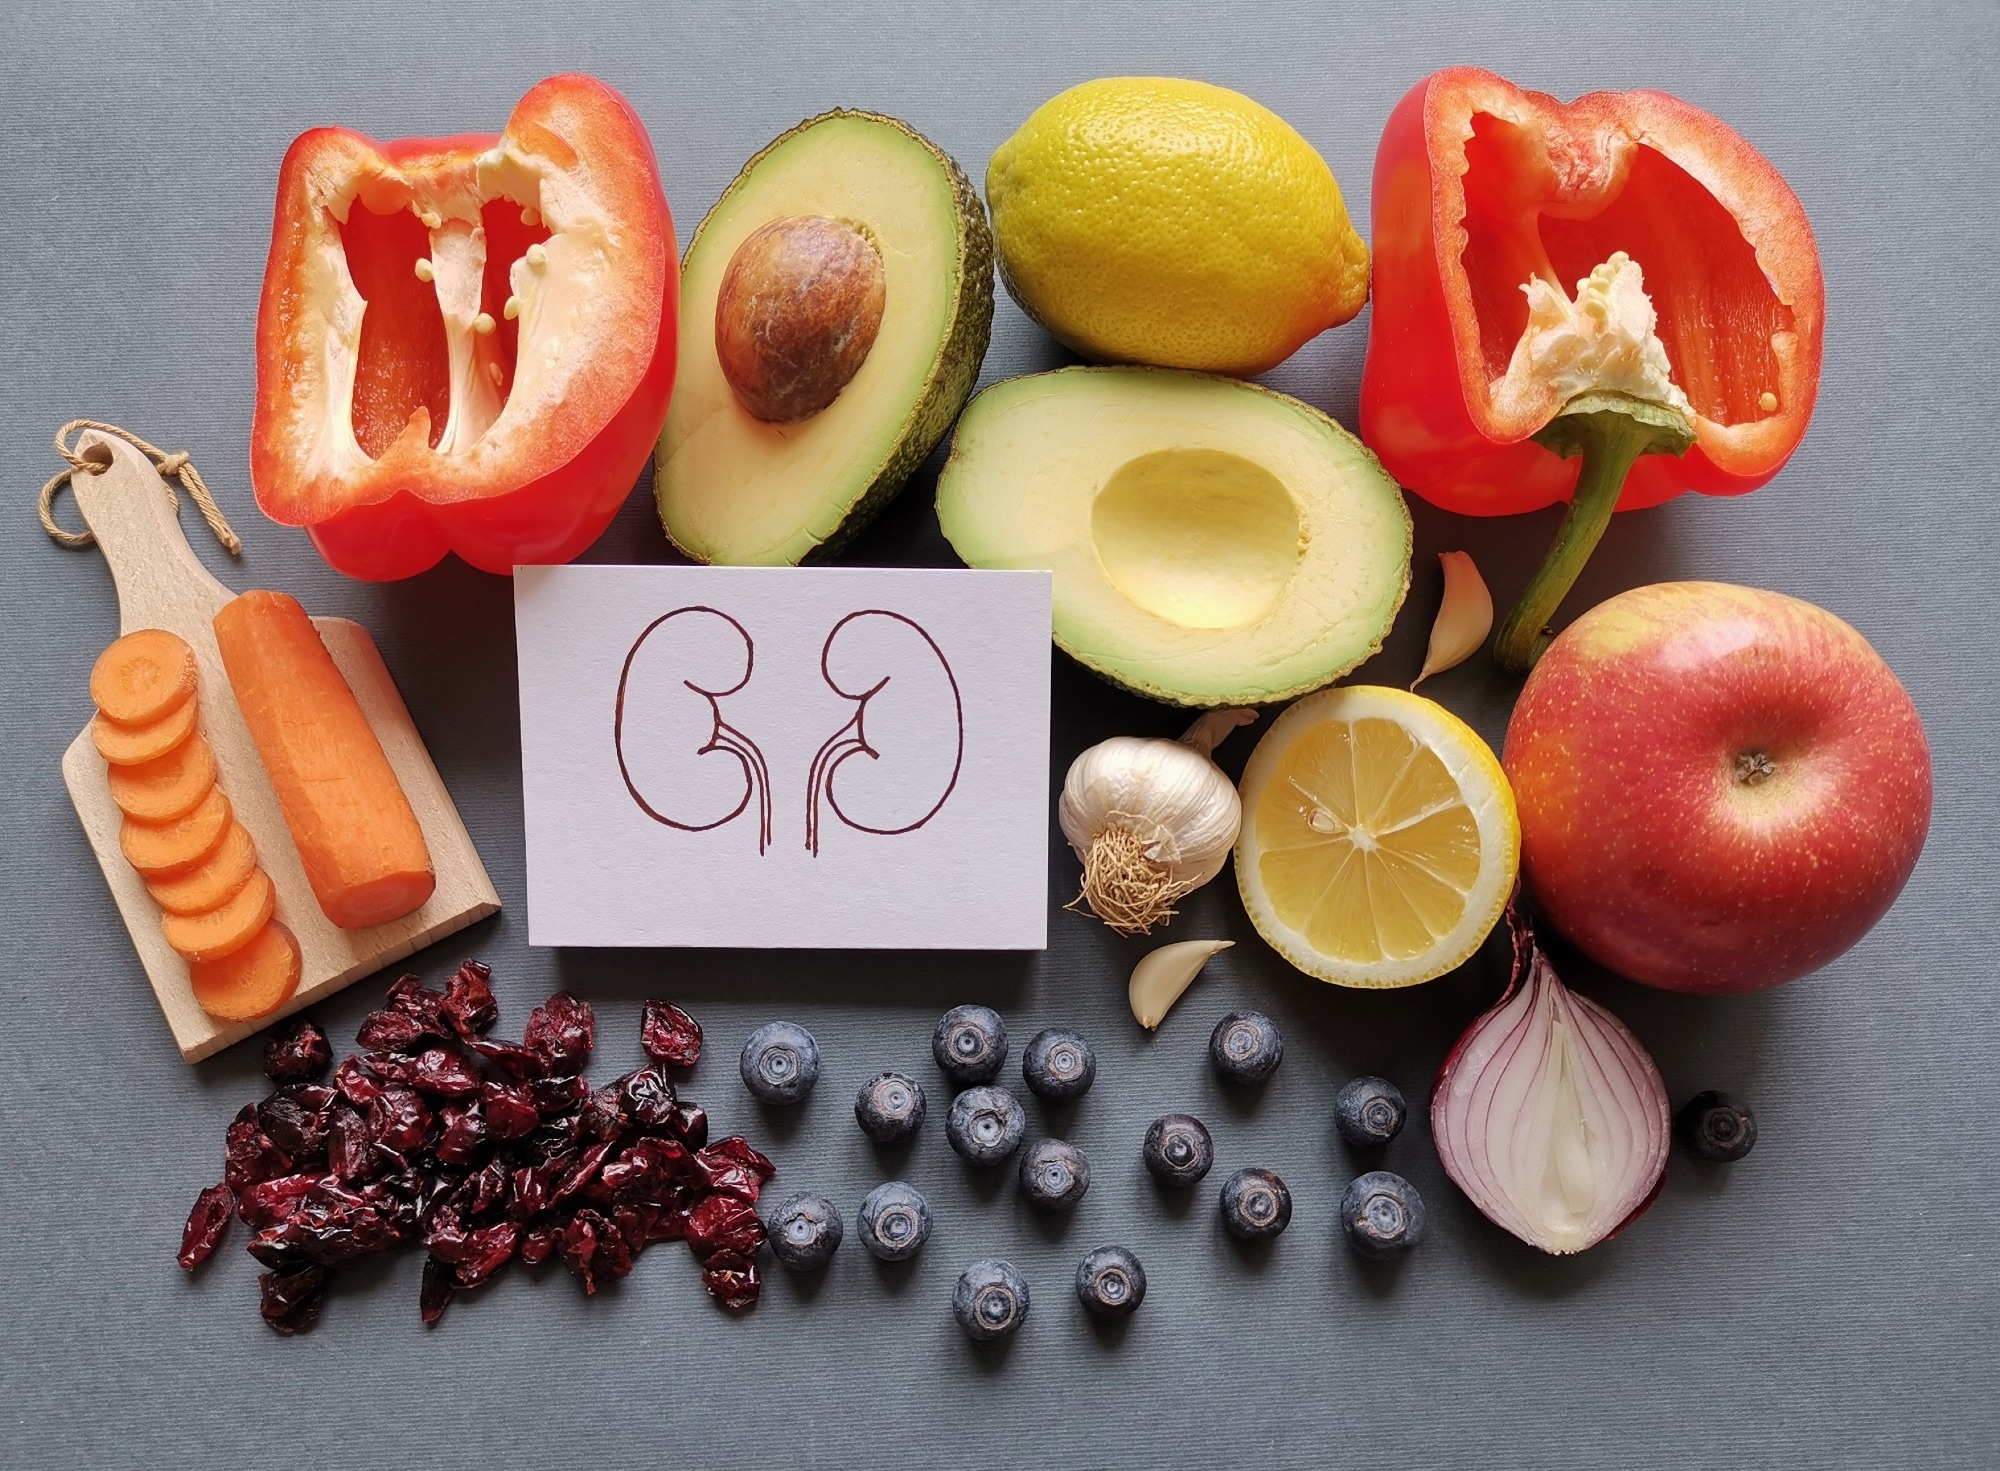 Study: The Fruit and Veggies for Kidney Health Study: A Prospective Randomized Trial. Image Credit: Danijela Maksimovic / Shutterstock